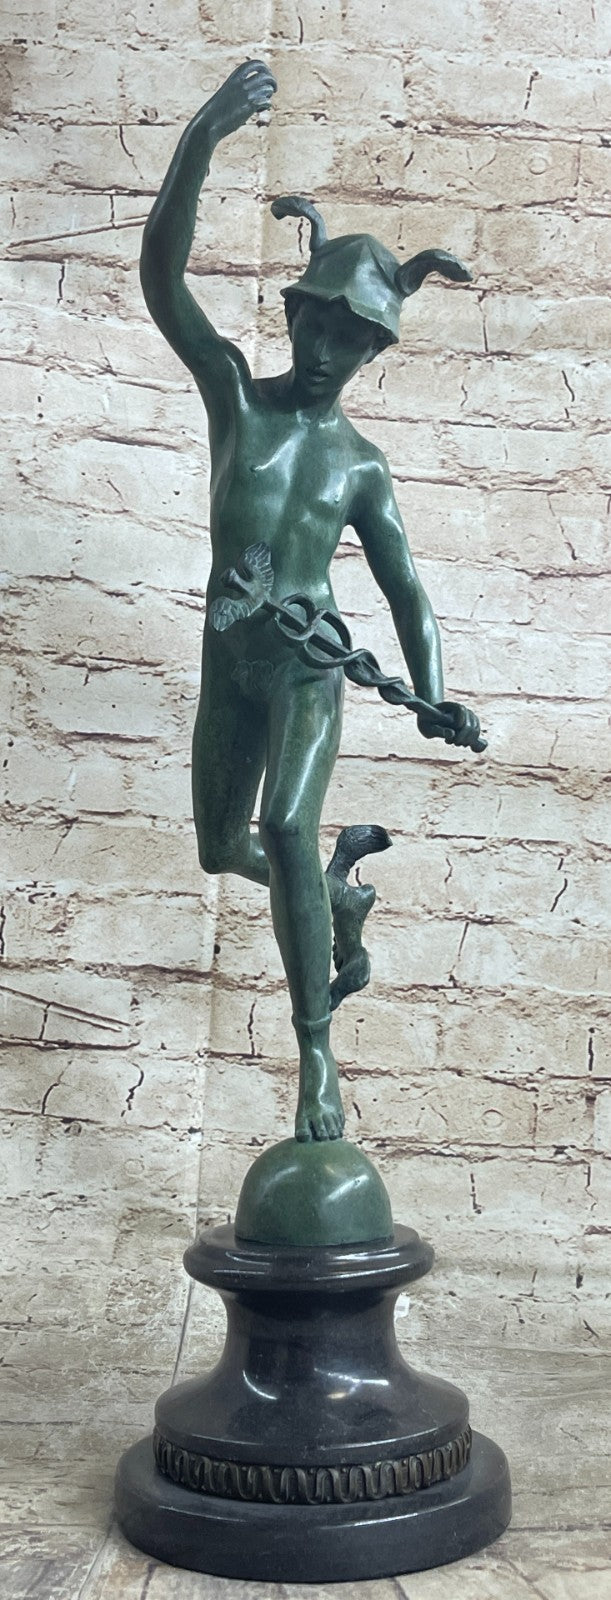 Flying Mercury Statue Hermes Messenger of the Gods Greek Nude Caduceus Bronze